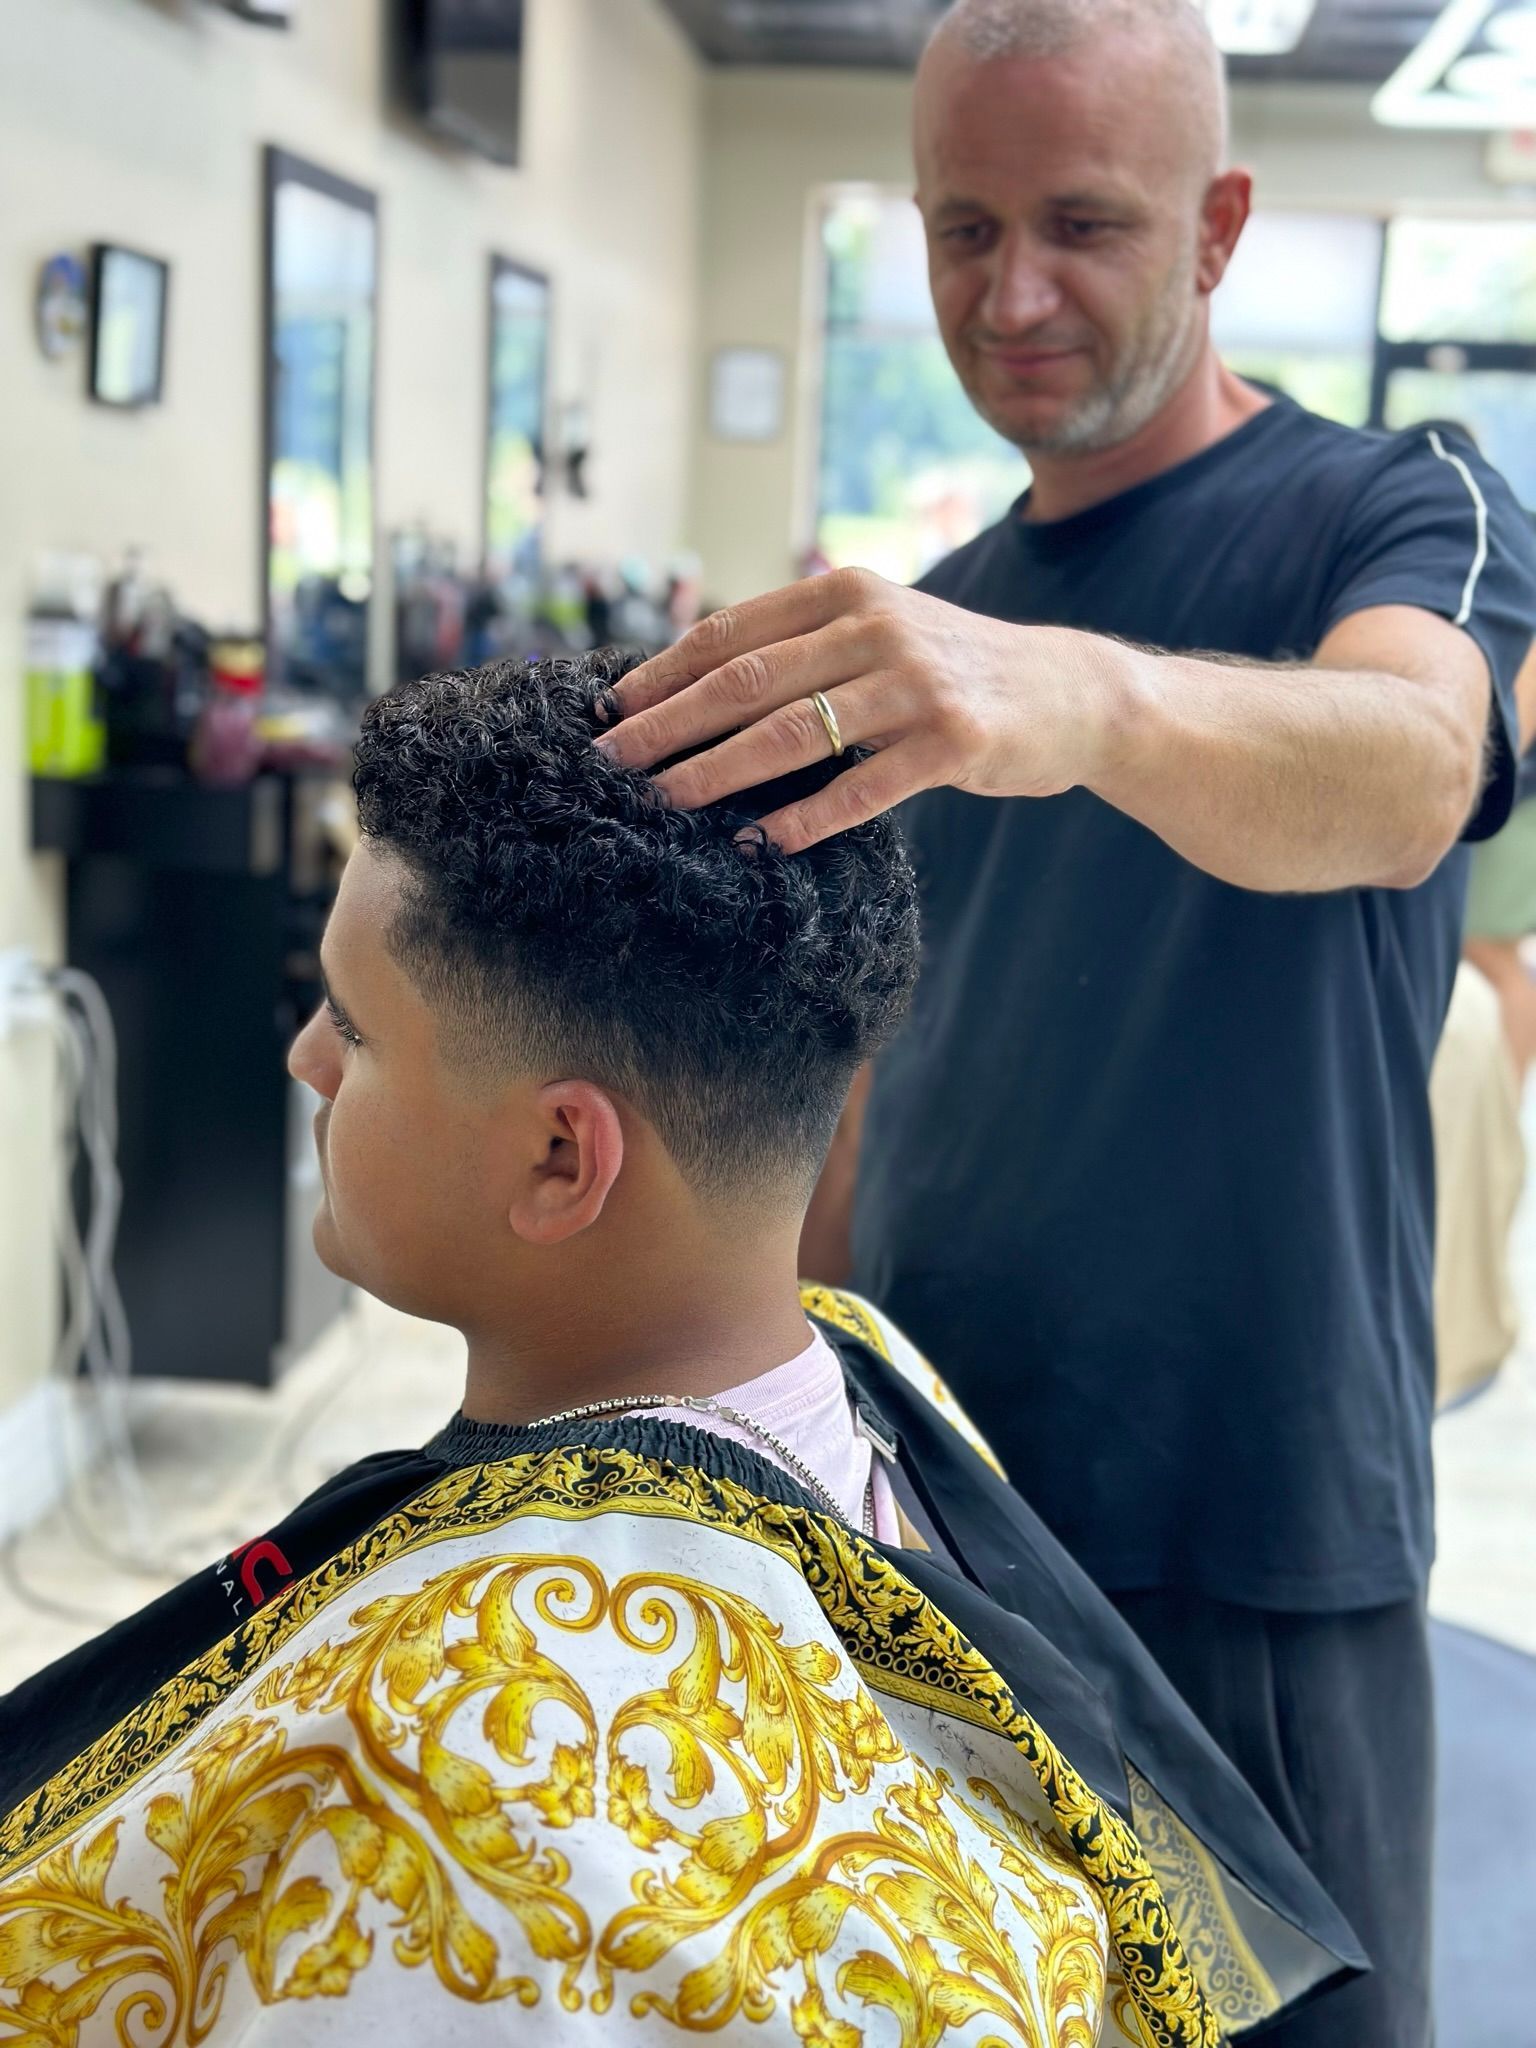 a man is cutting a man 's hair in a barber shop .